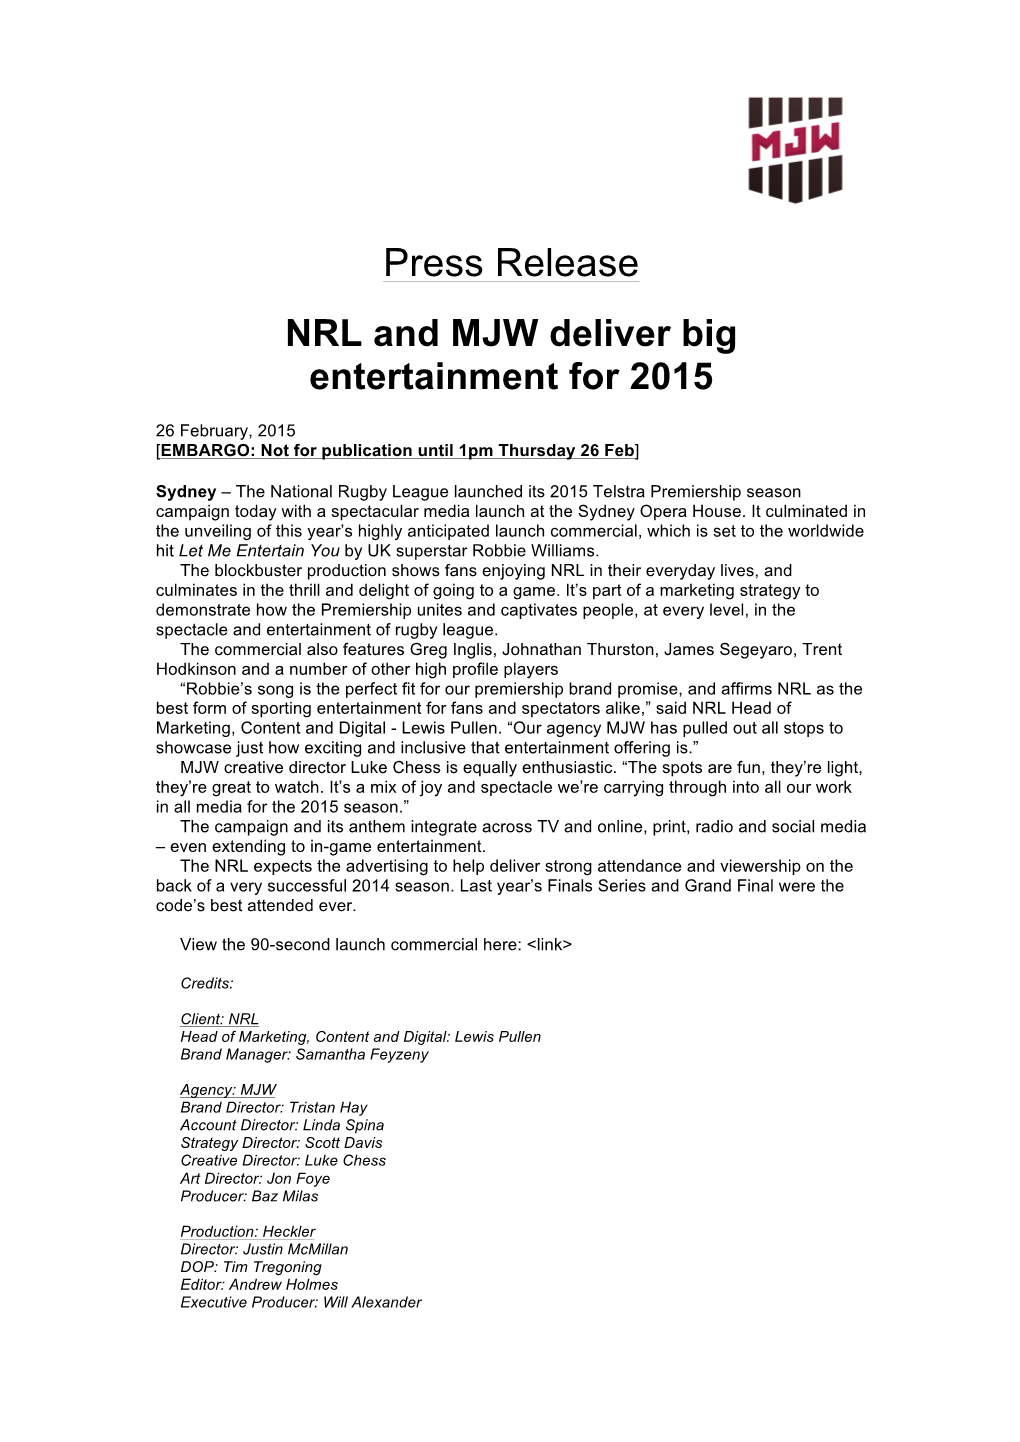 NRL Press Release Premiership Advertising